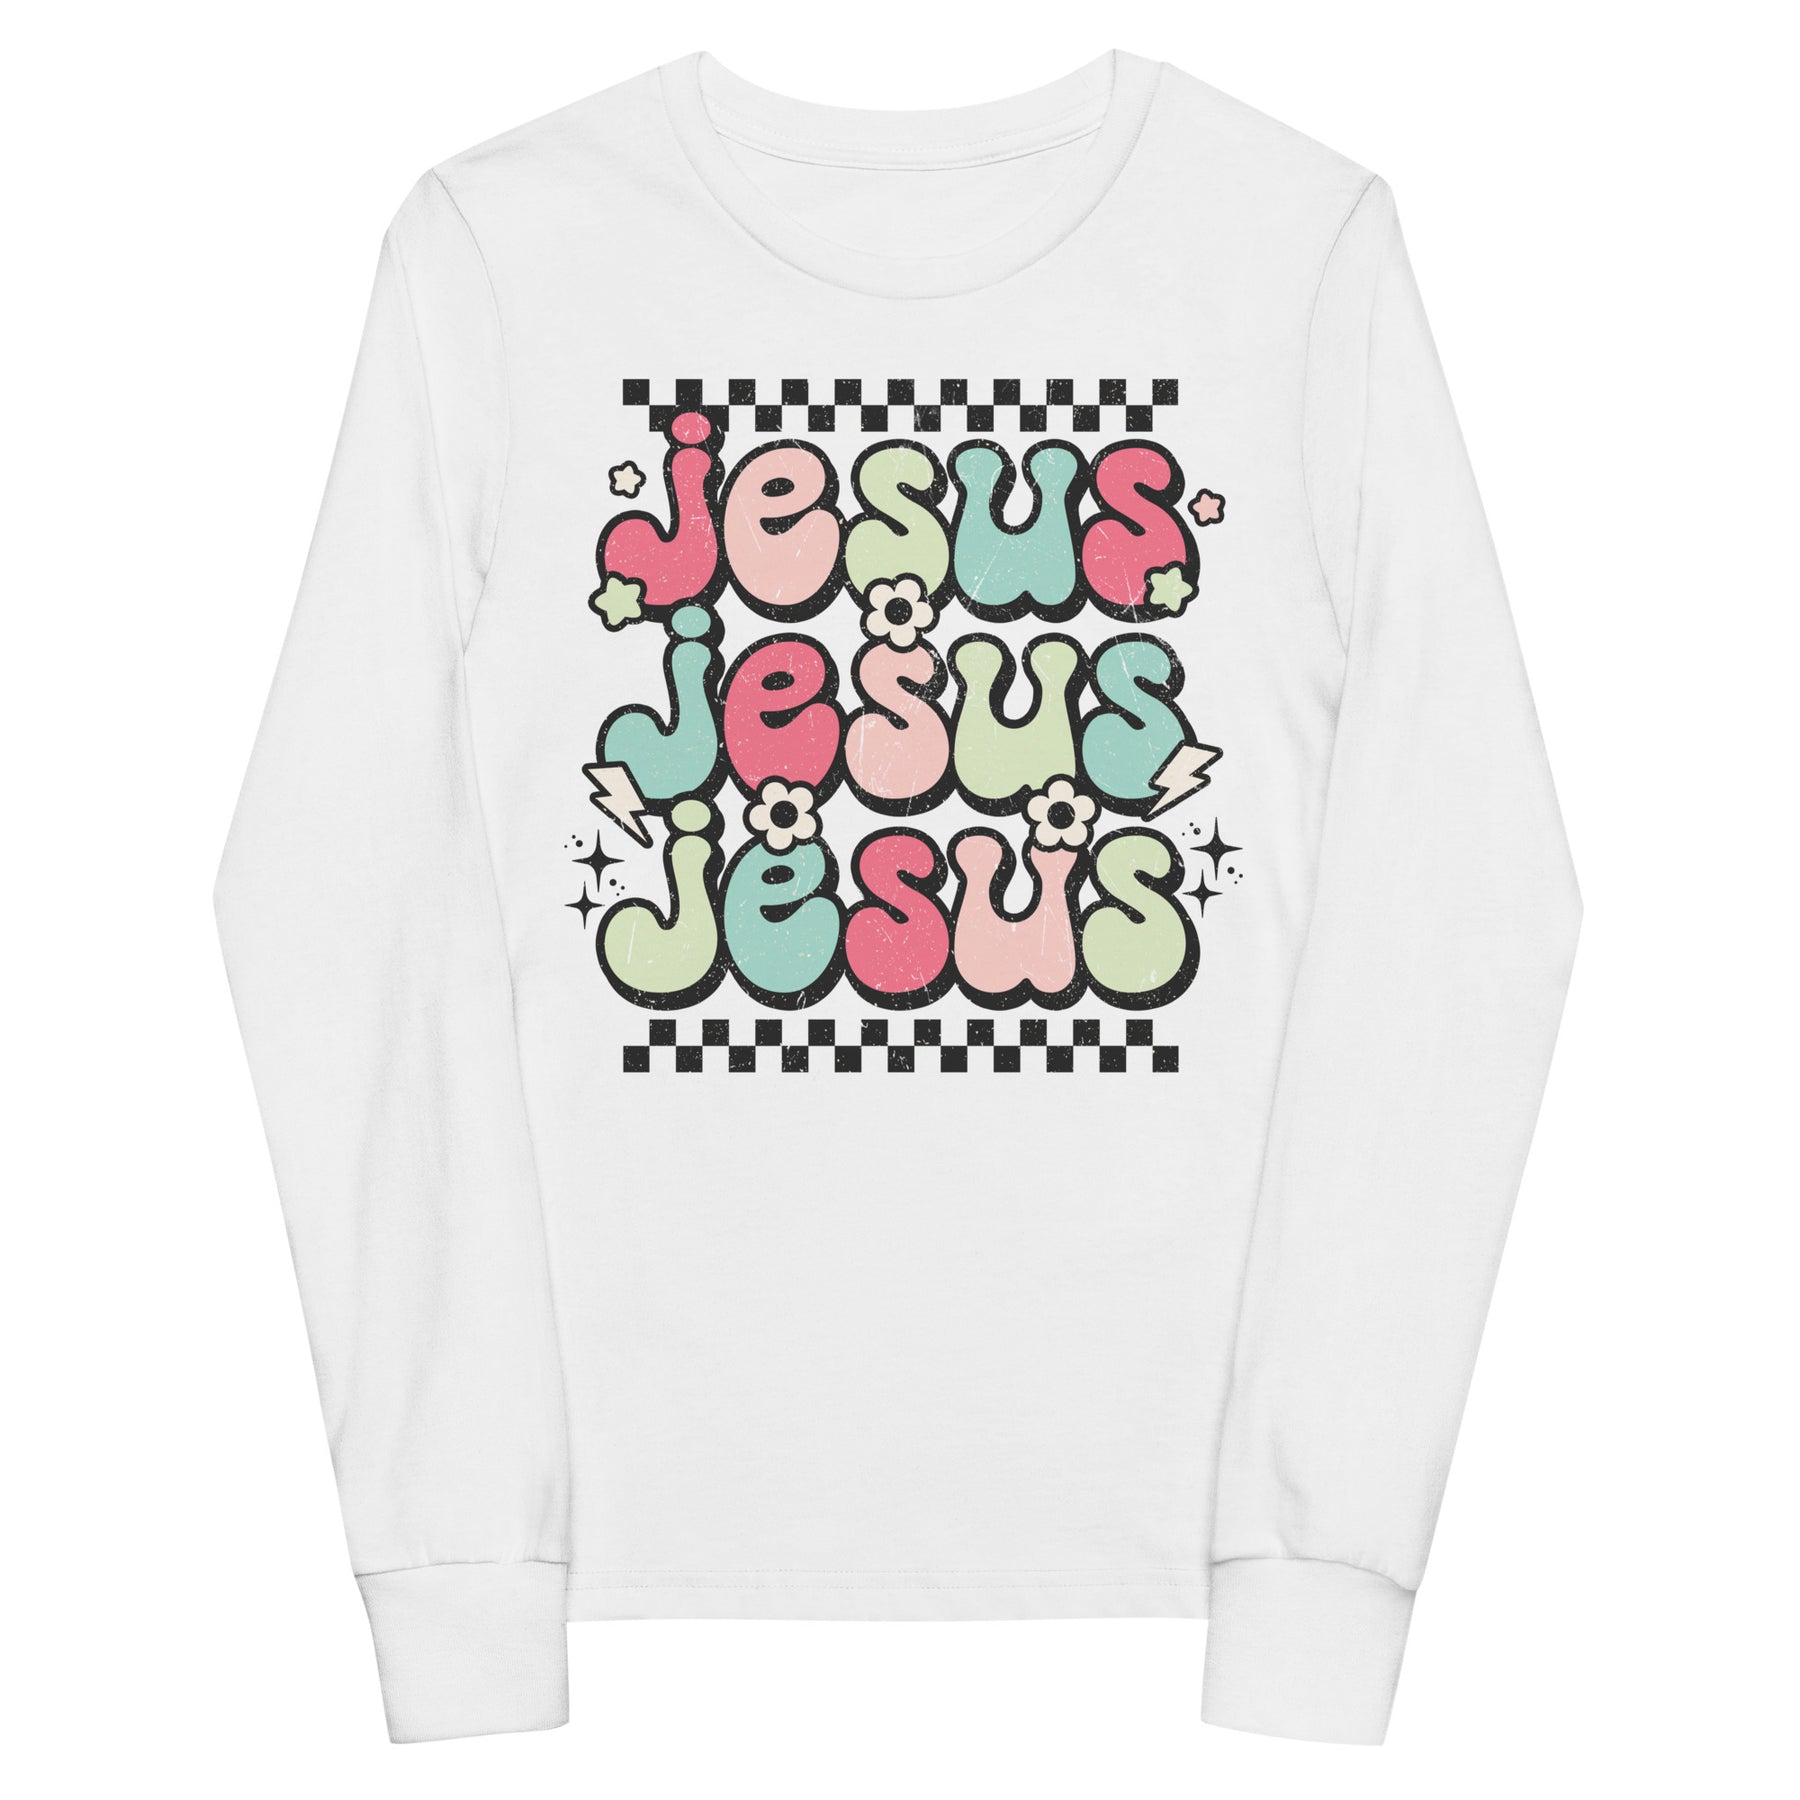 Jesus Jesus Jesus - Girls' Long Sleeve T-Shirt